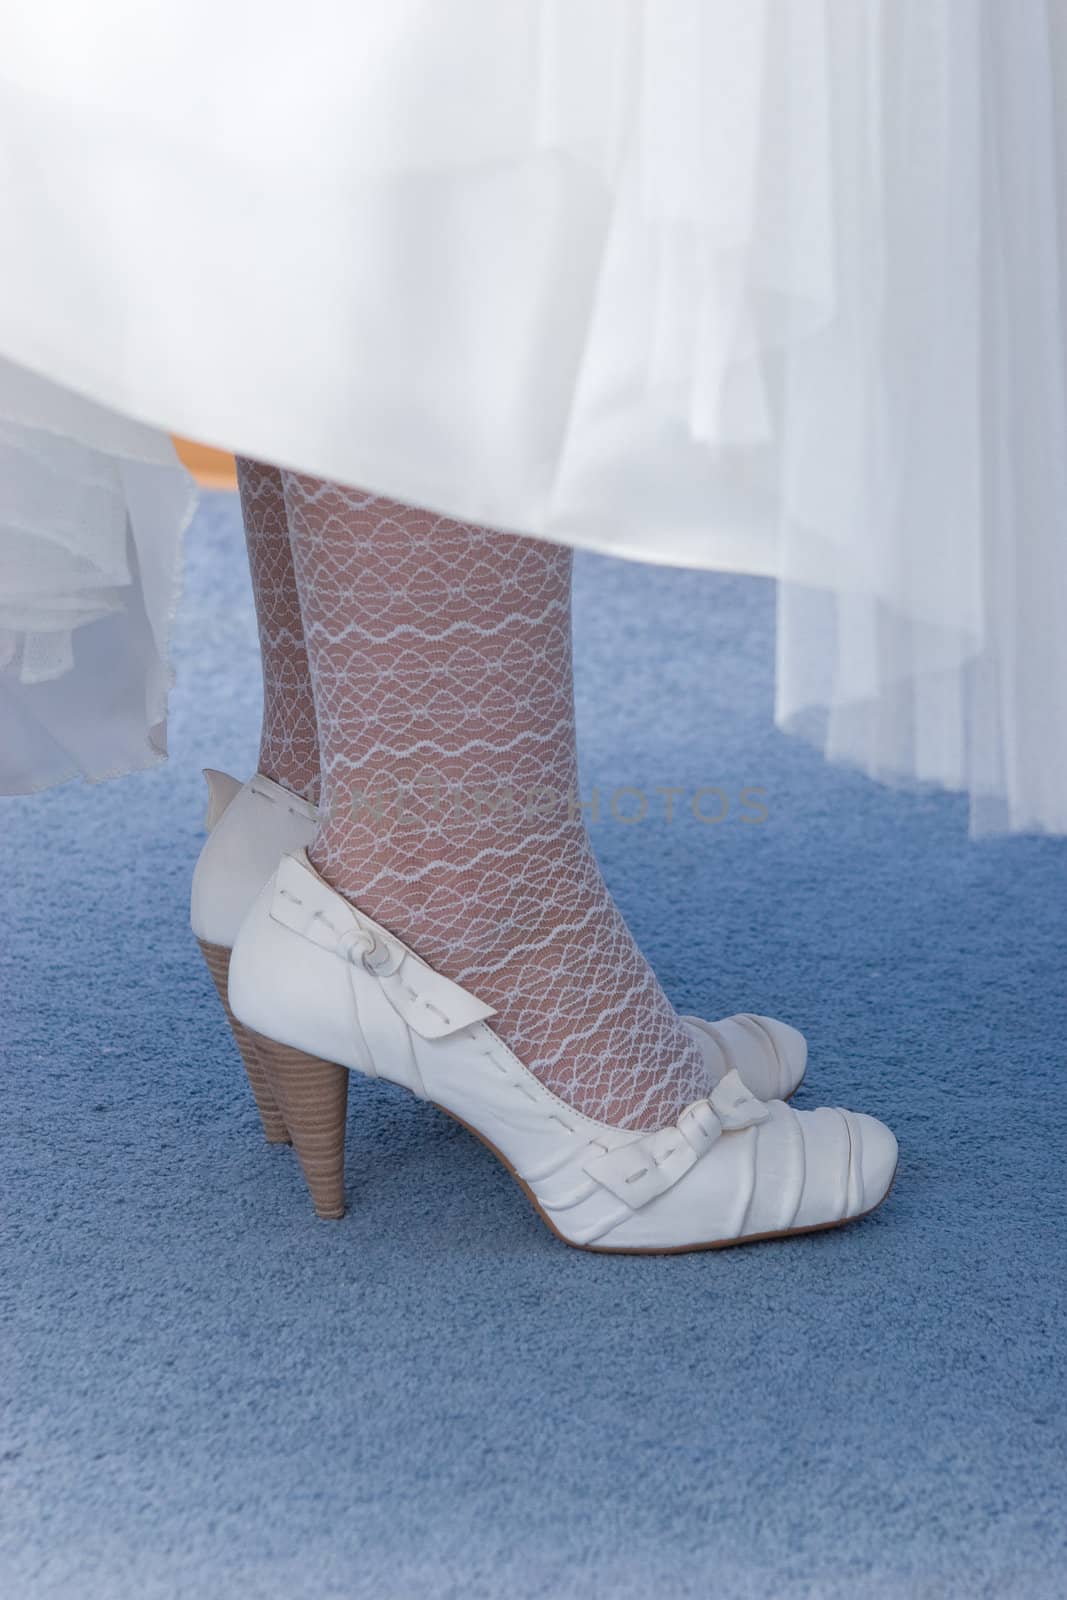 shoe of the bride by vsurkov